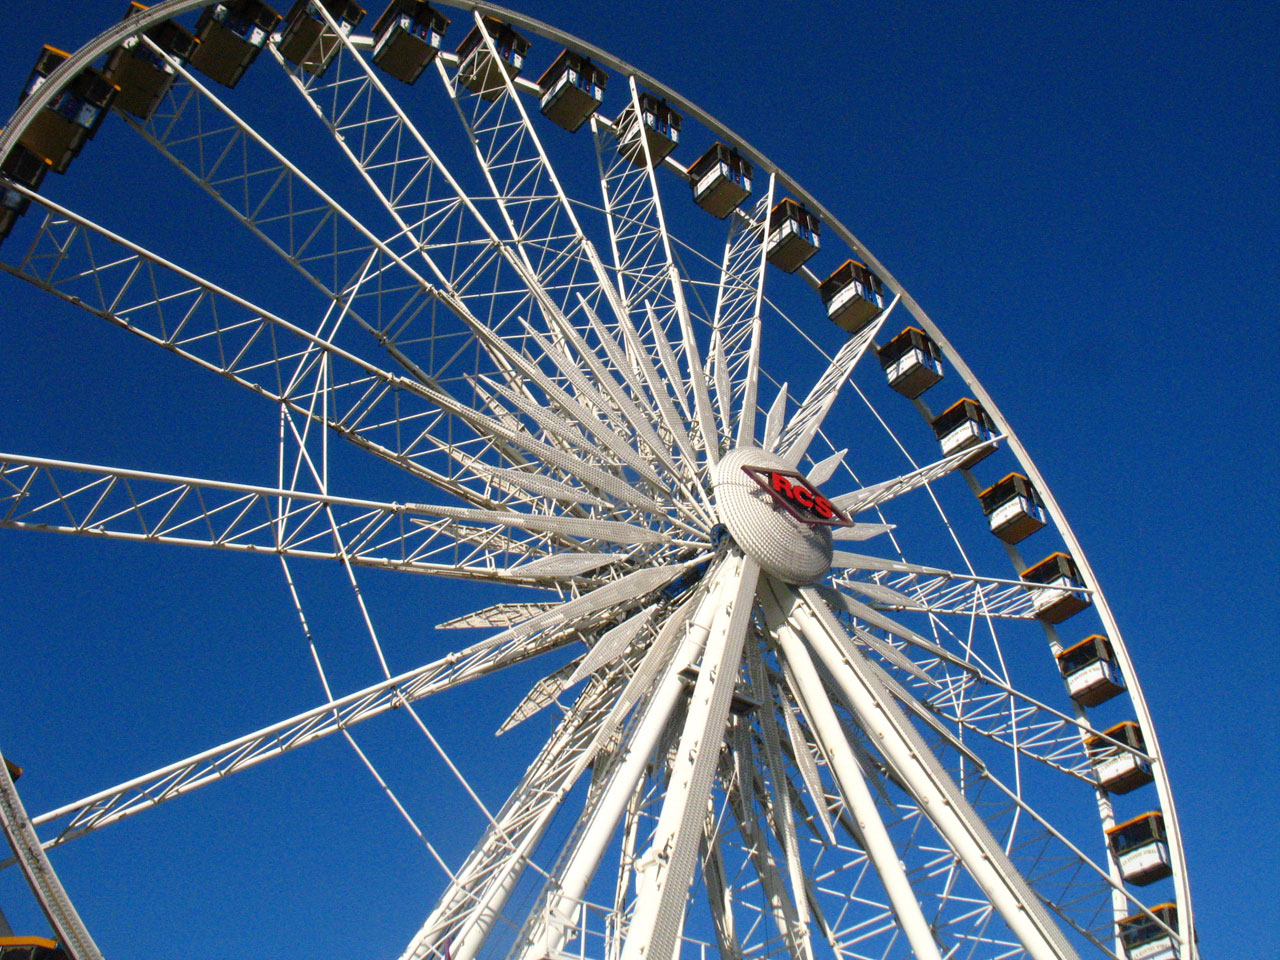 Ferris Wheel at the Orange County Fair in Costa Mesa, California